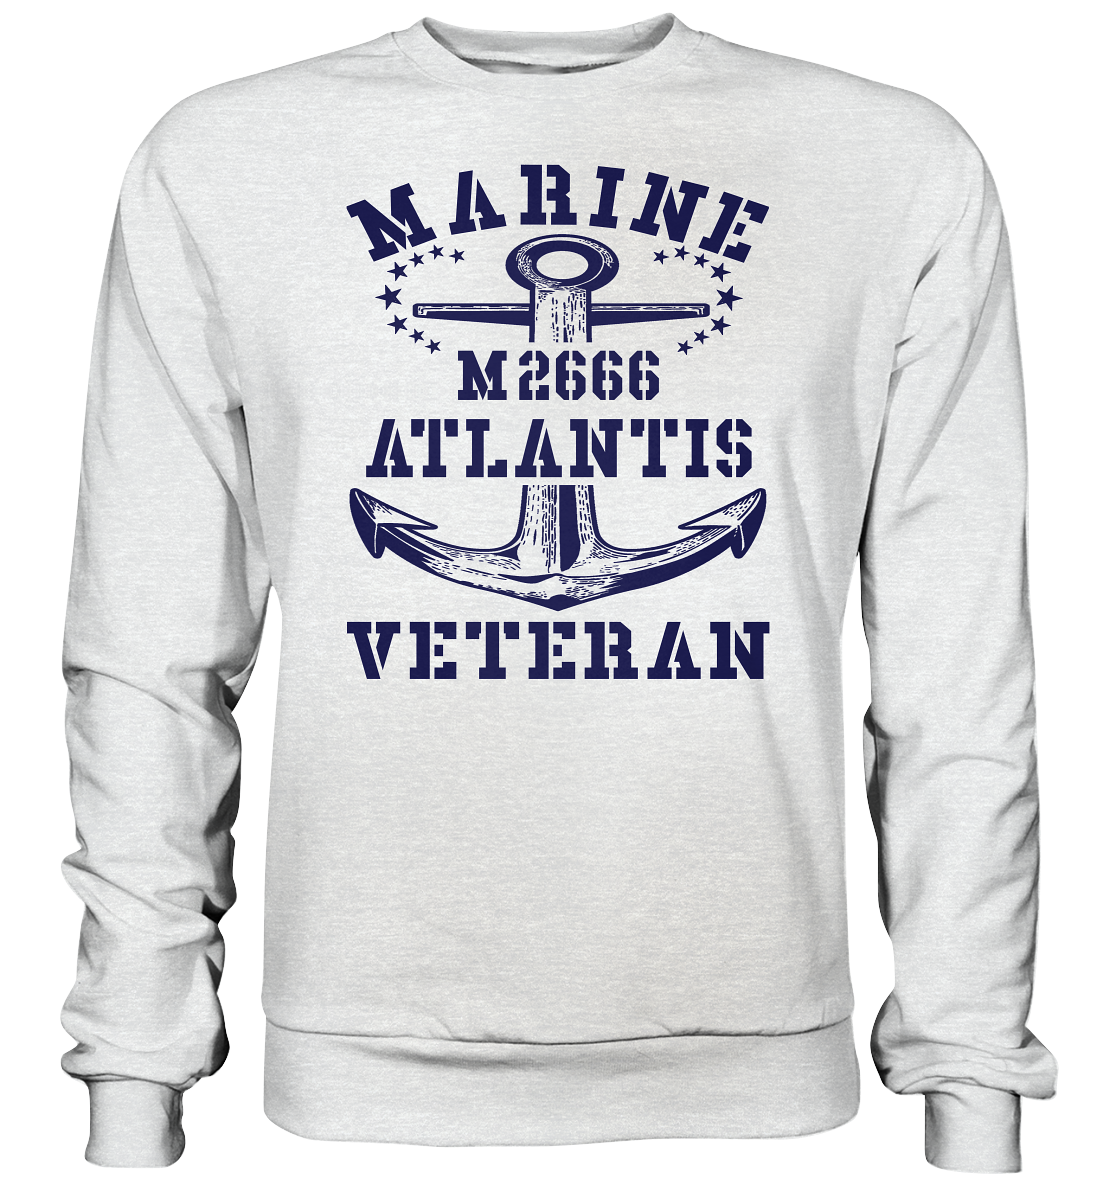 BiMi M2666 ATLANTIS Marine Veteran - Premium Sweatshirt